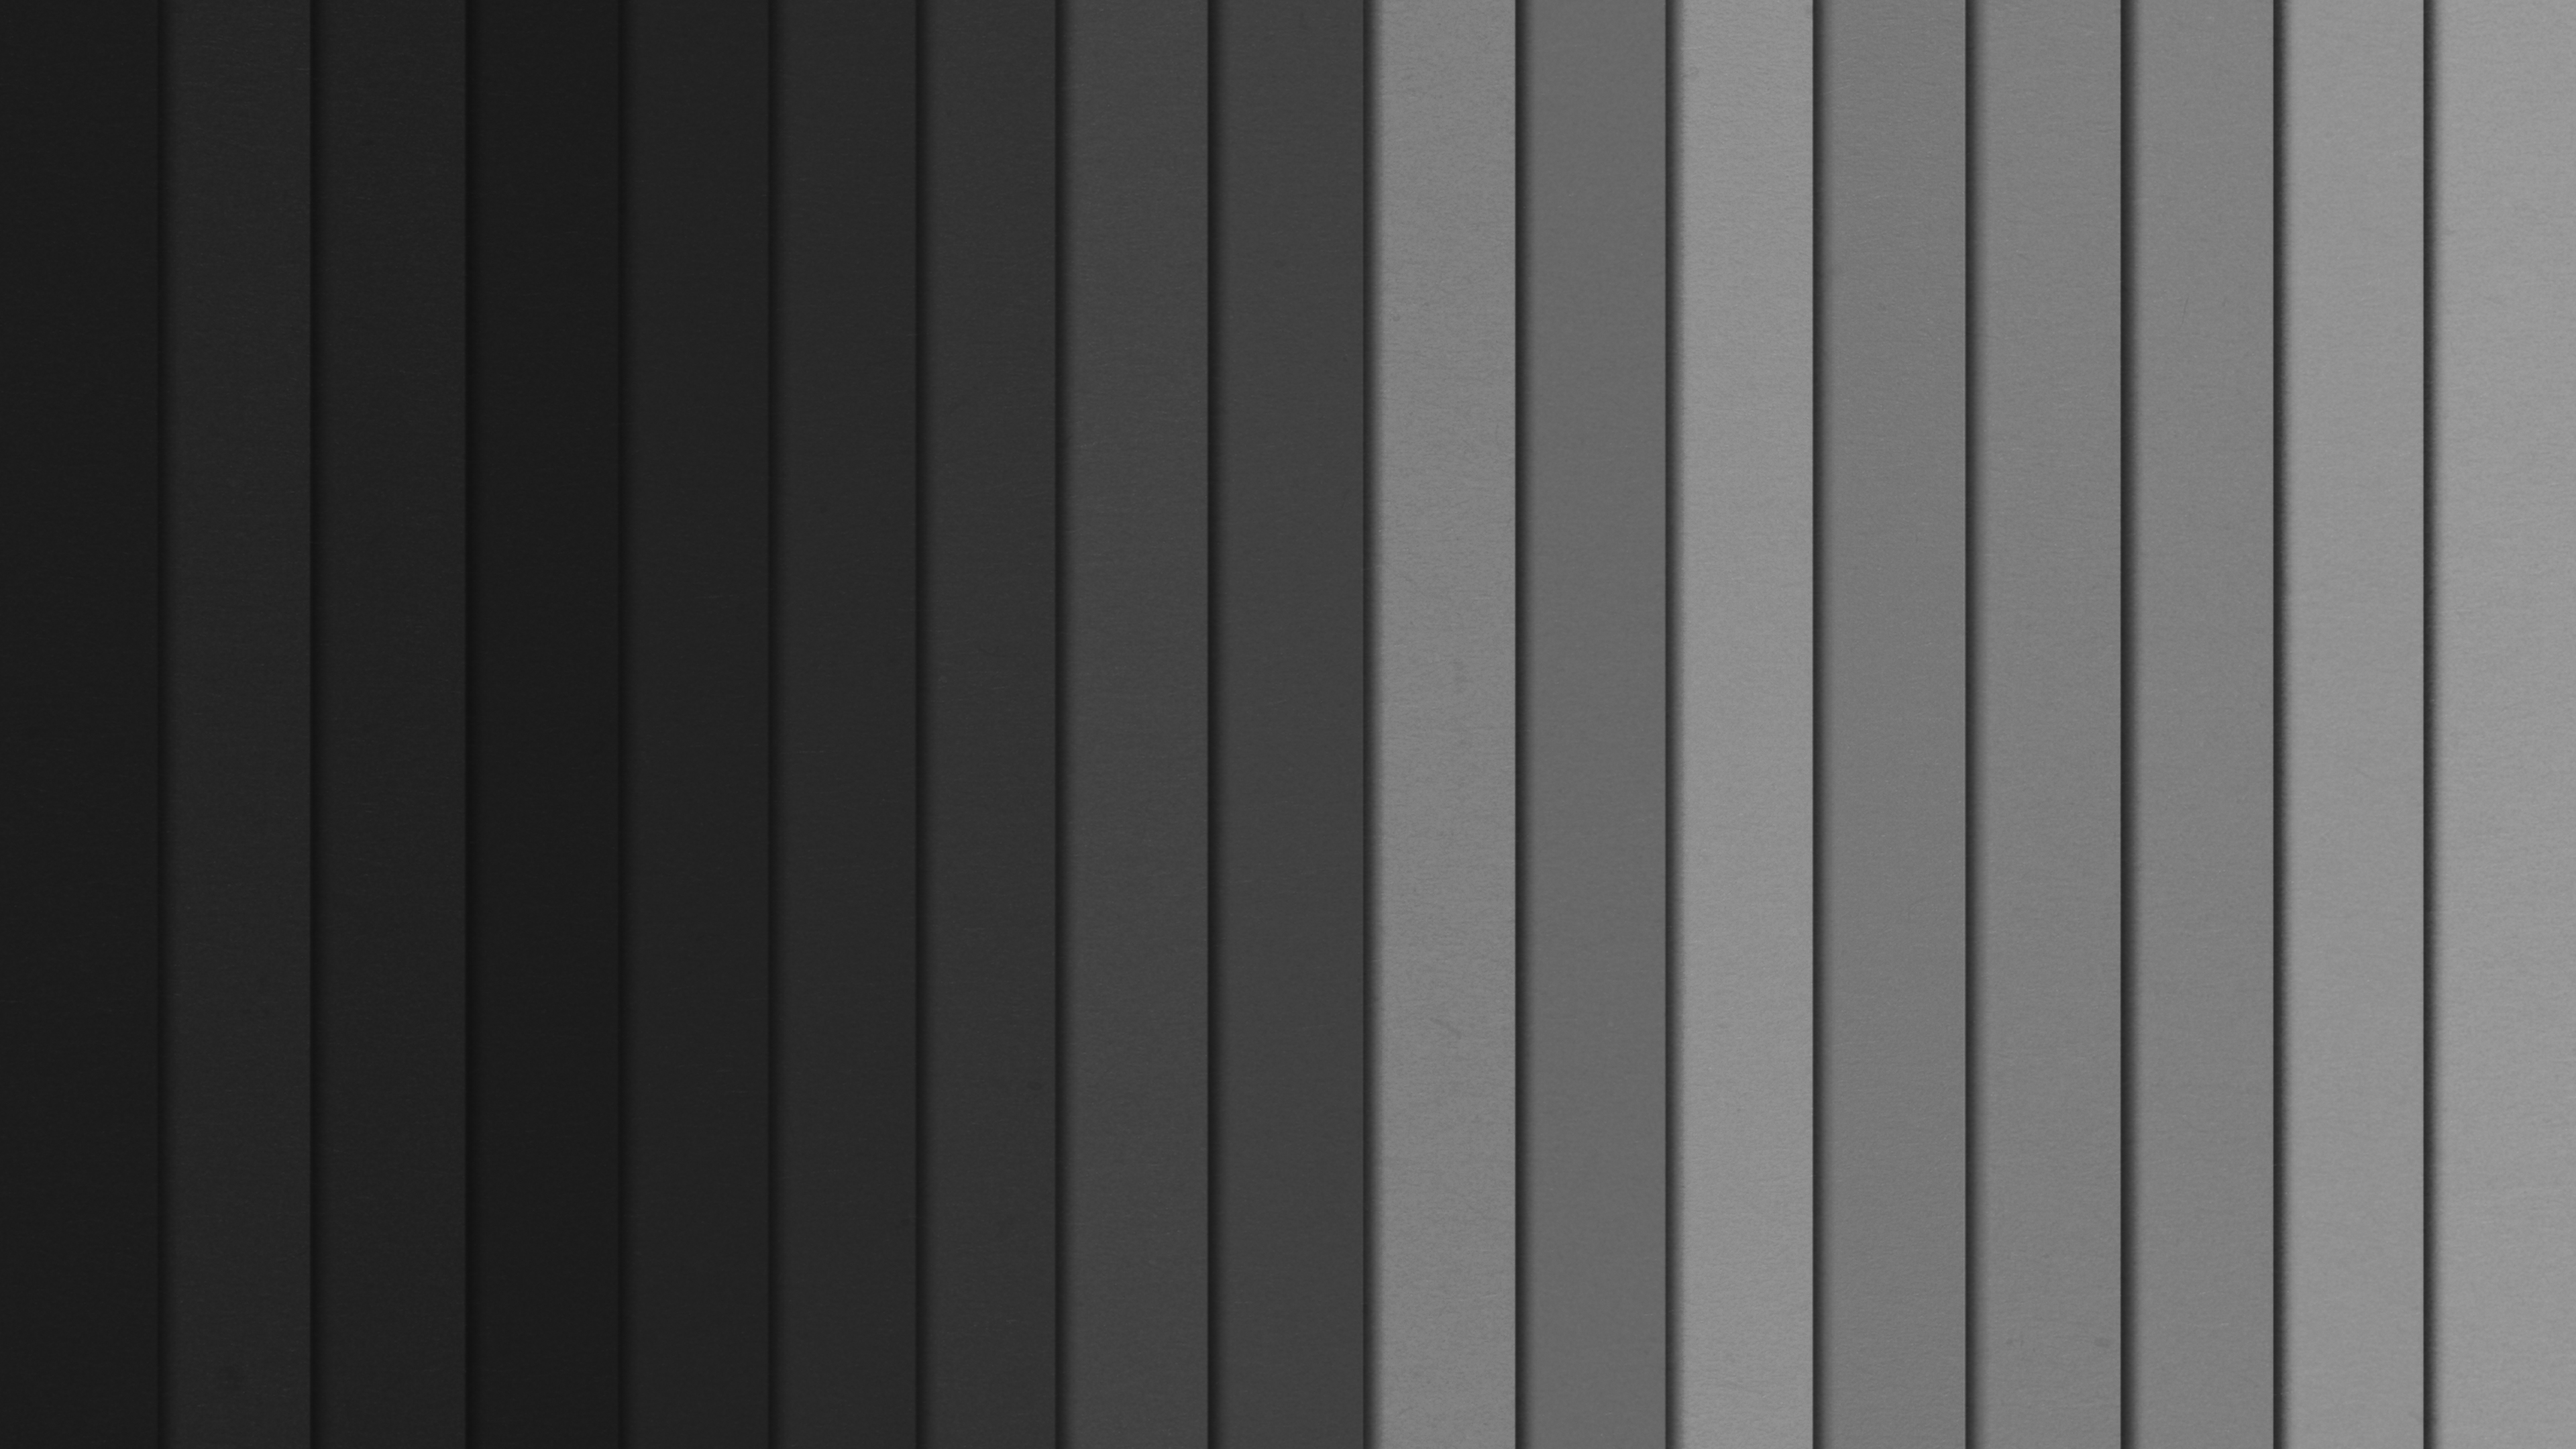 Shades of Grey 4K Wallpaper | 3840 x 2160 px